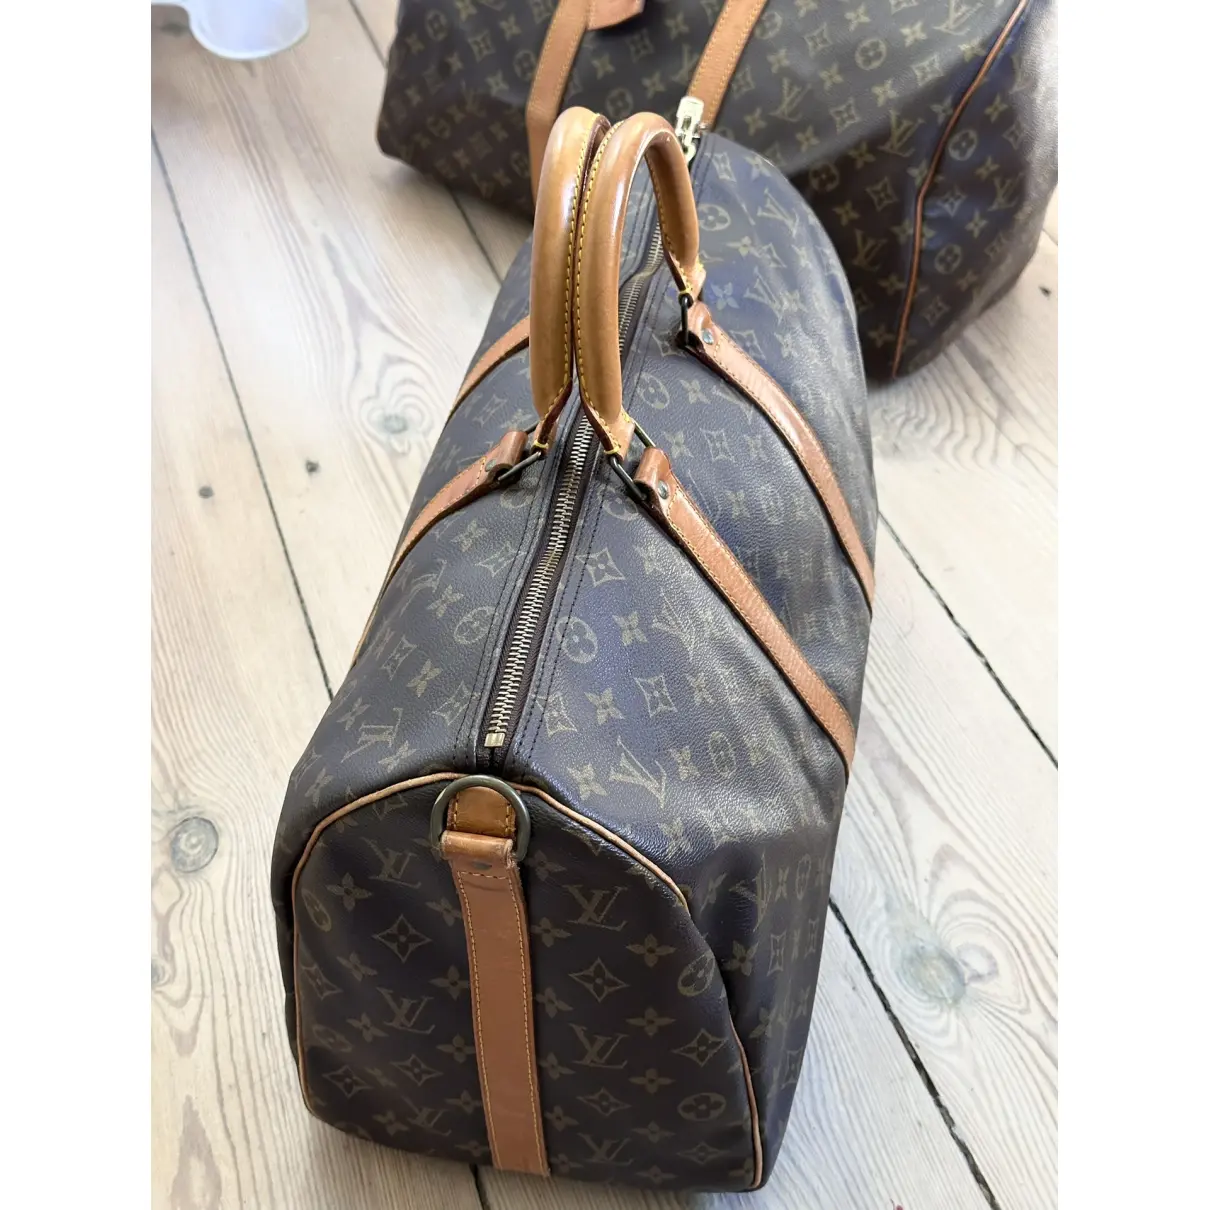 Buy Louis Vuitton Keepall cloth travel bag online - Vintage